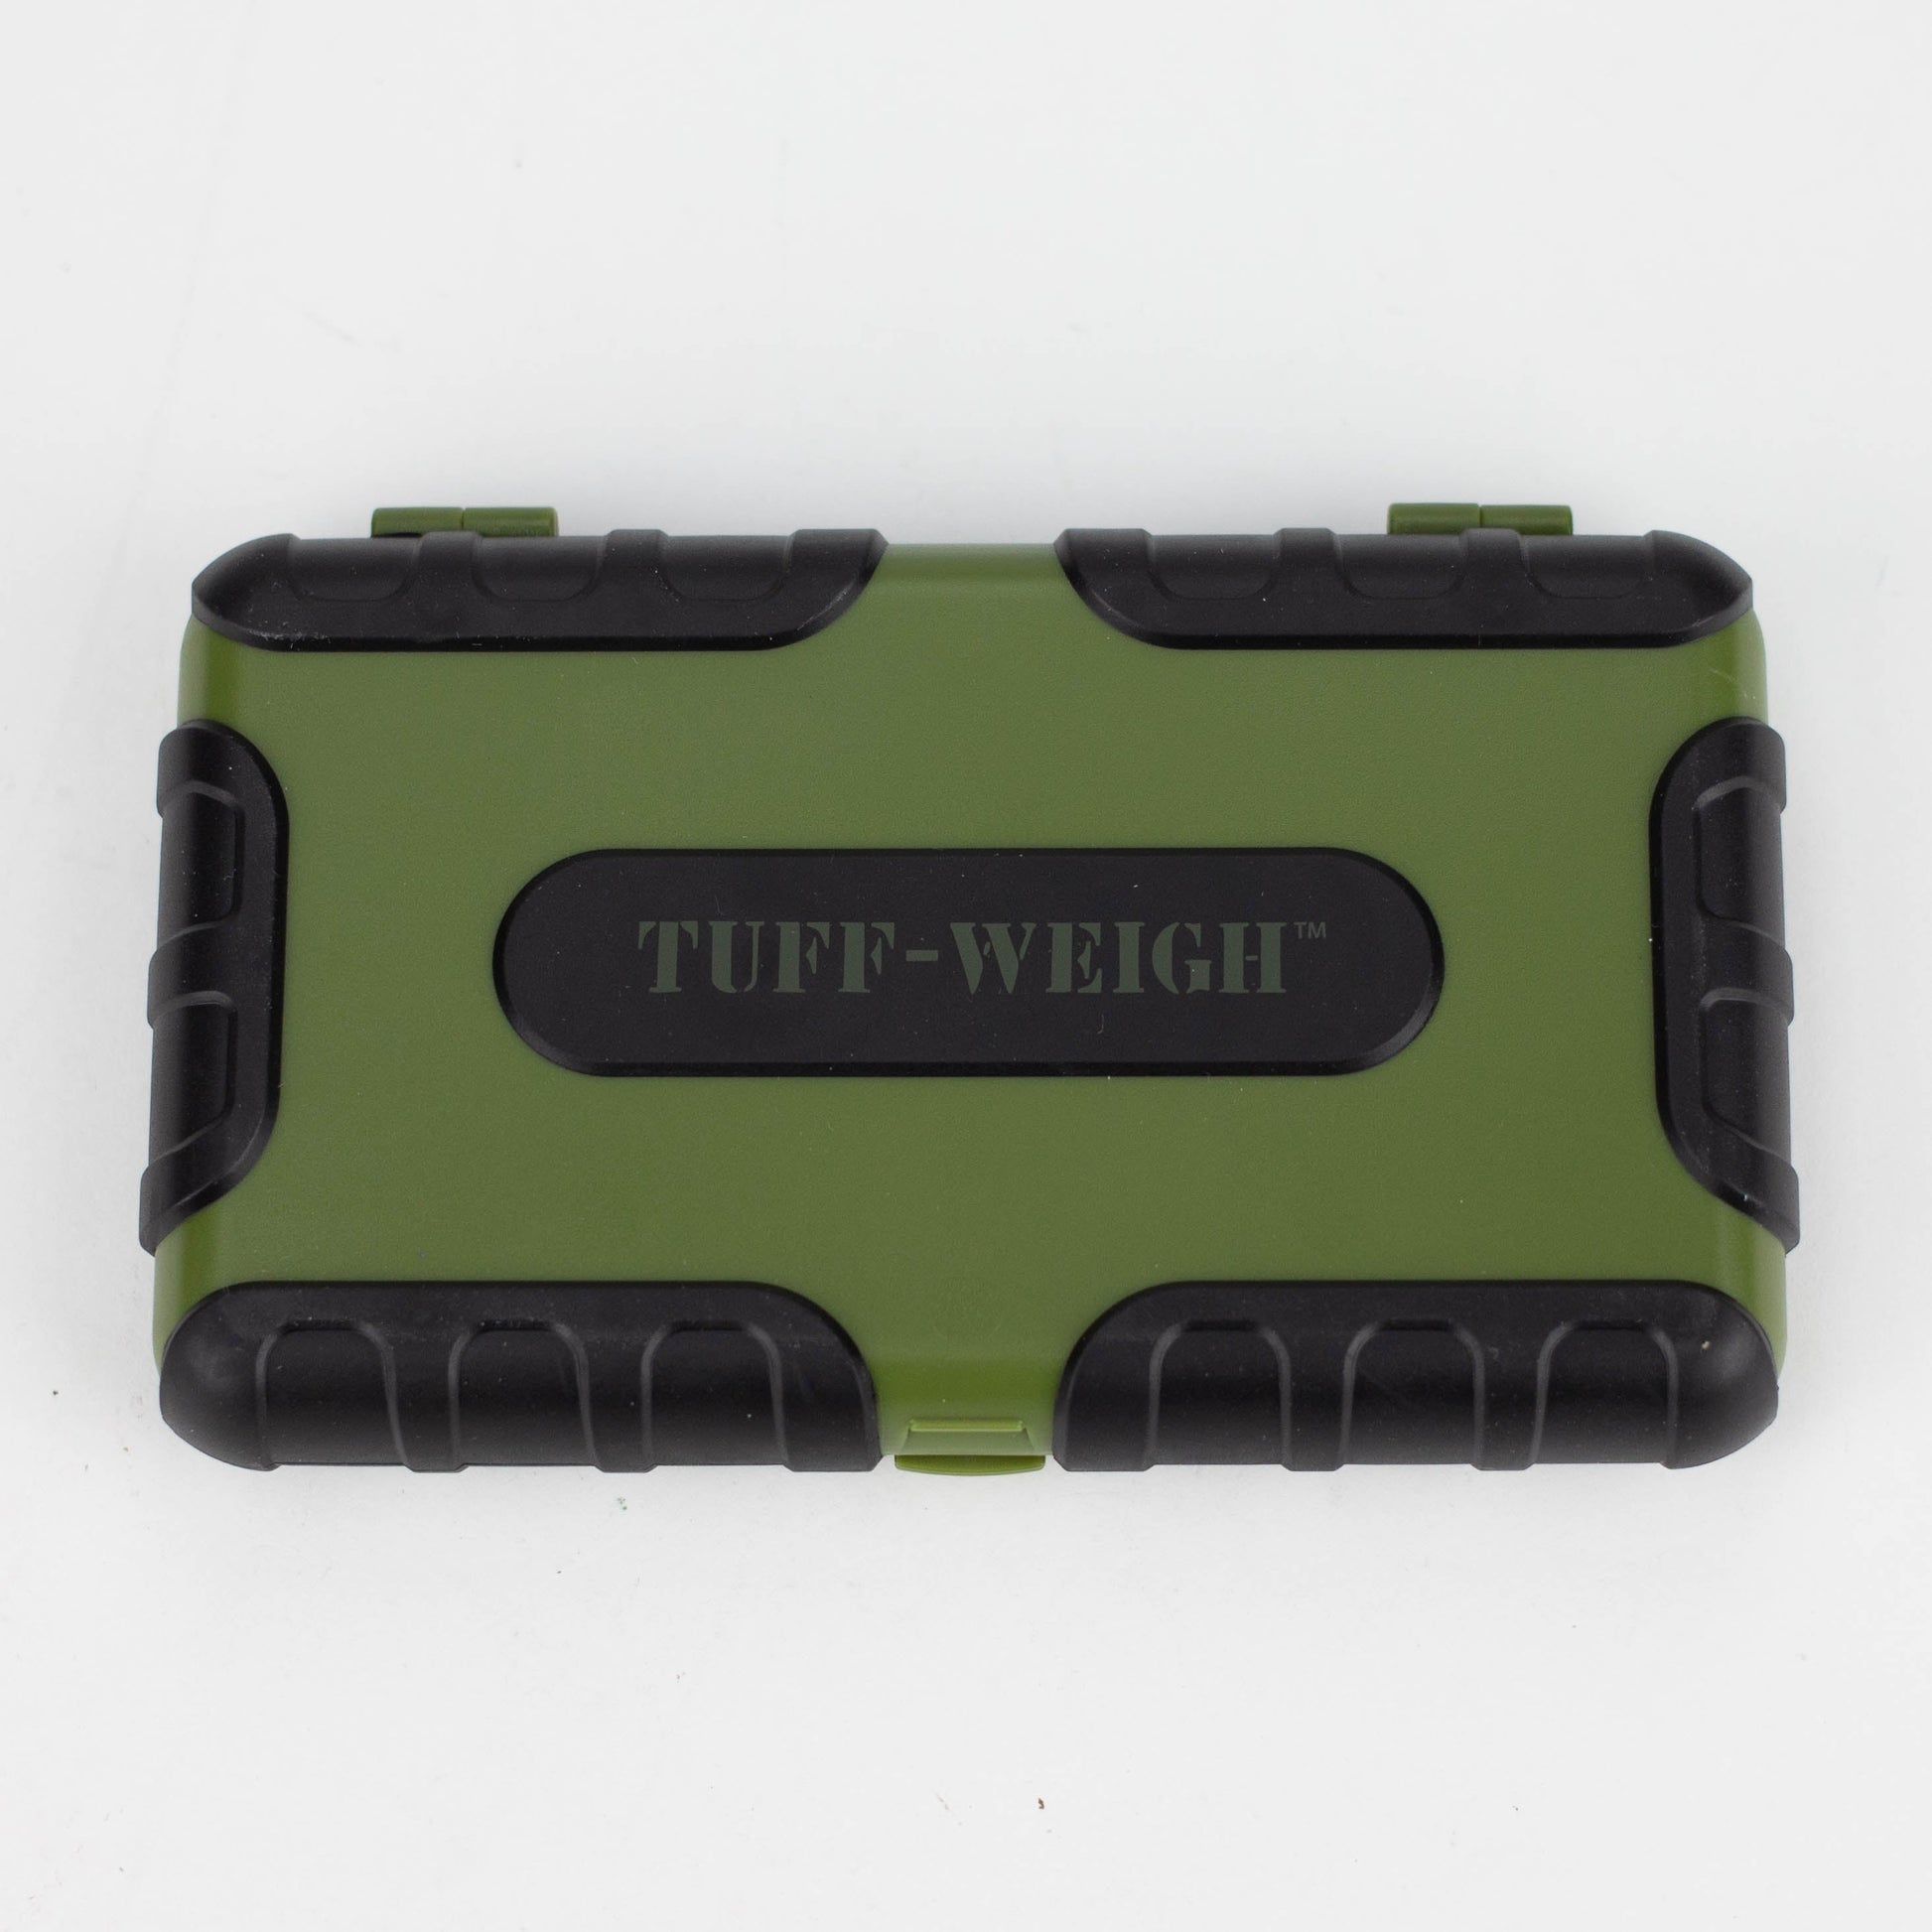 Truweigh | Tuff-Weigh Scale - 200g x 0.01g_4